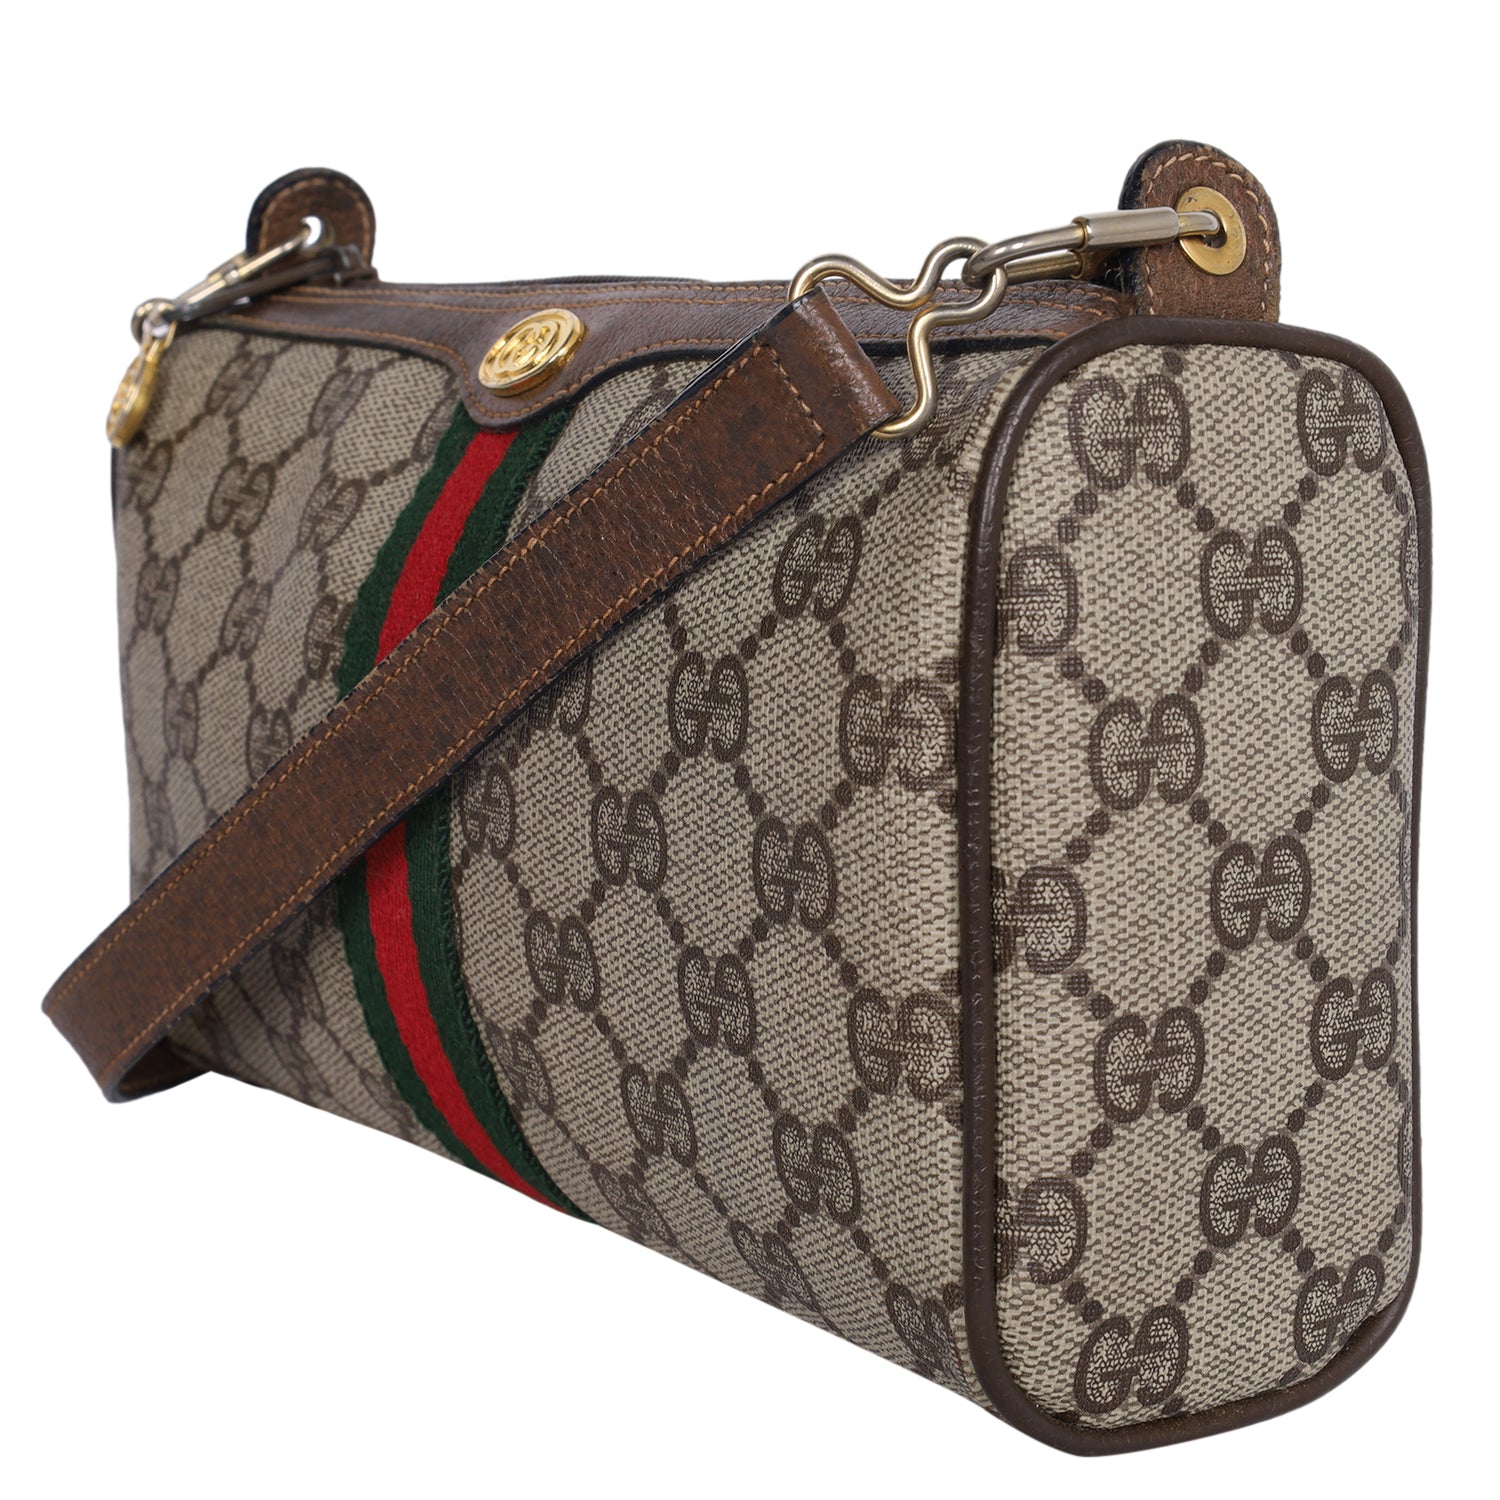 Gucci Vintage GG Supreme Monogram Web Ophidia Crossbody Bag Small